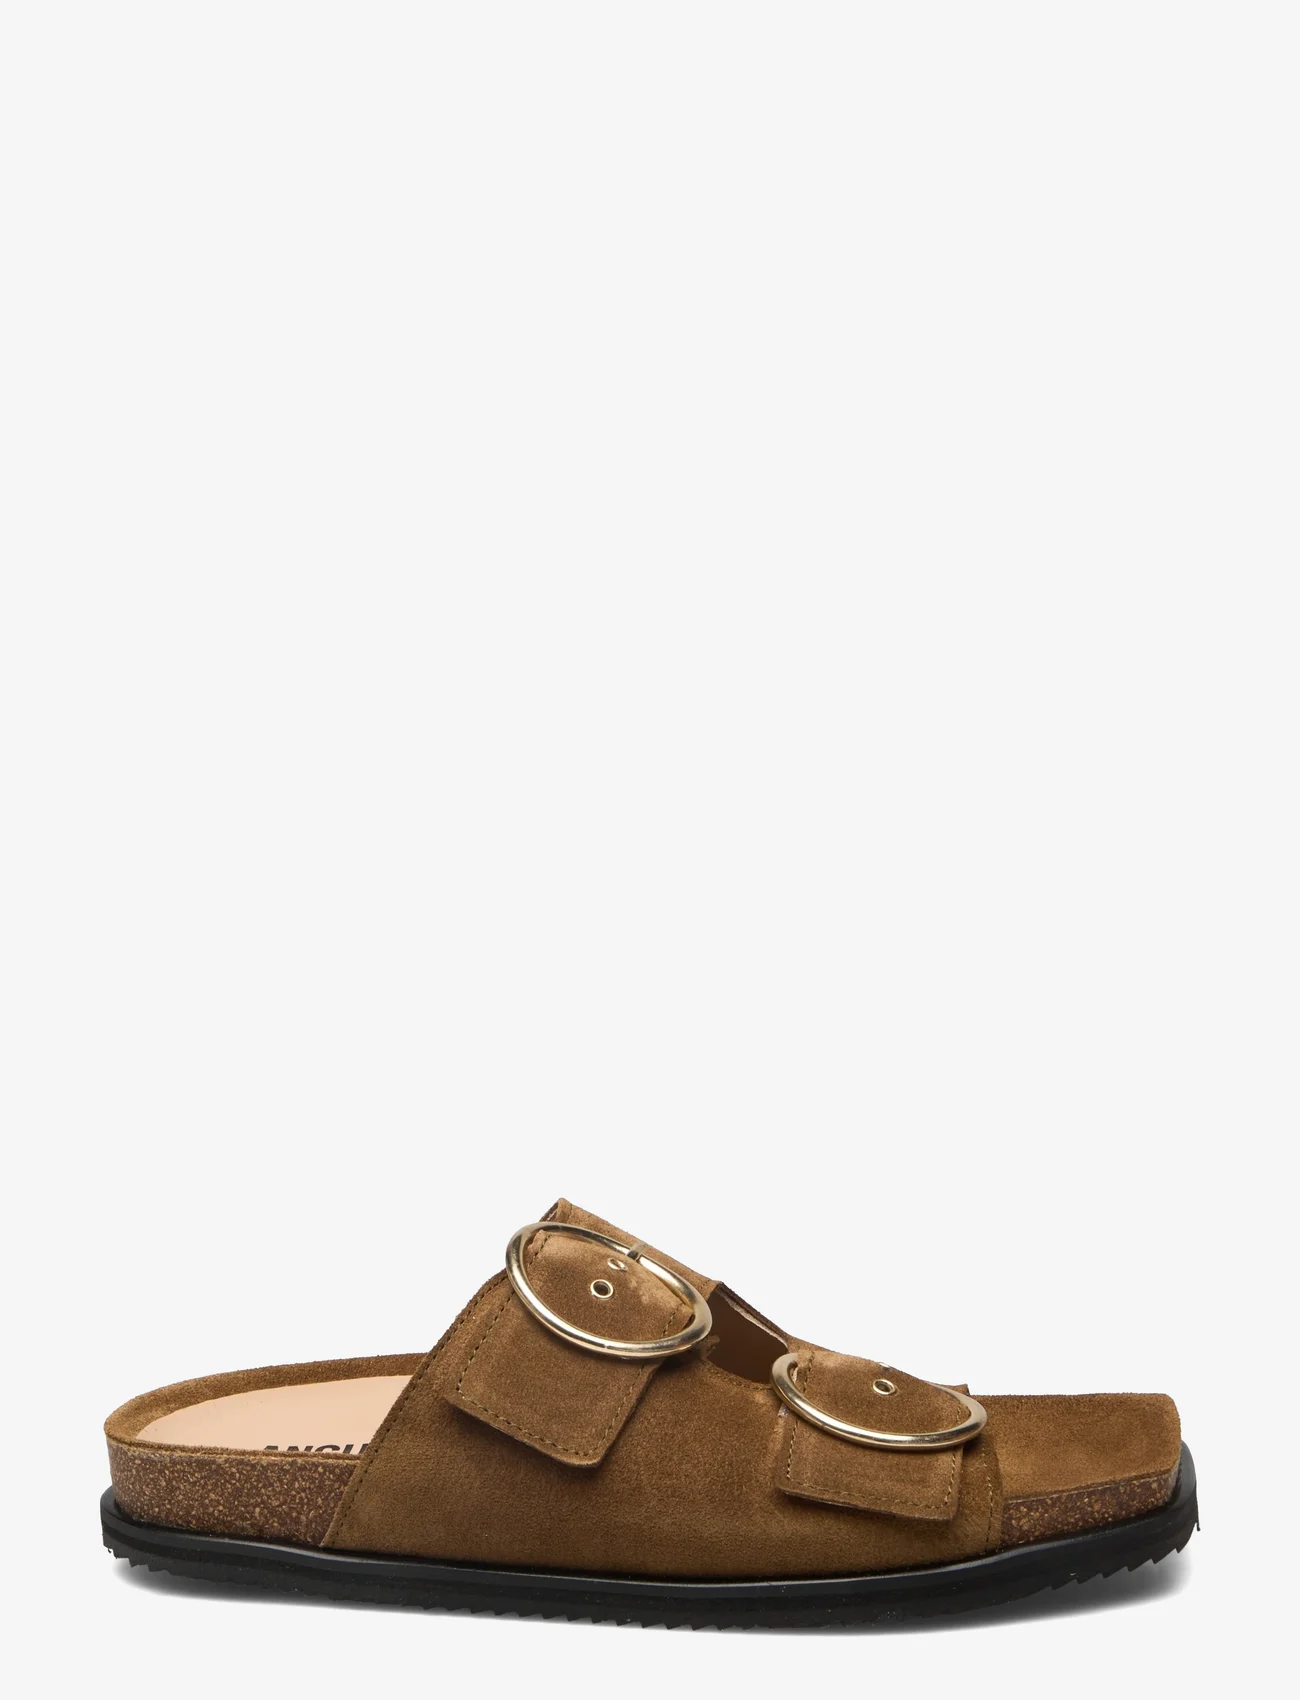 ANGULUS - Sandals - flat - open toe - op - flache sandalen - 2209 mustard - 1